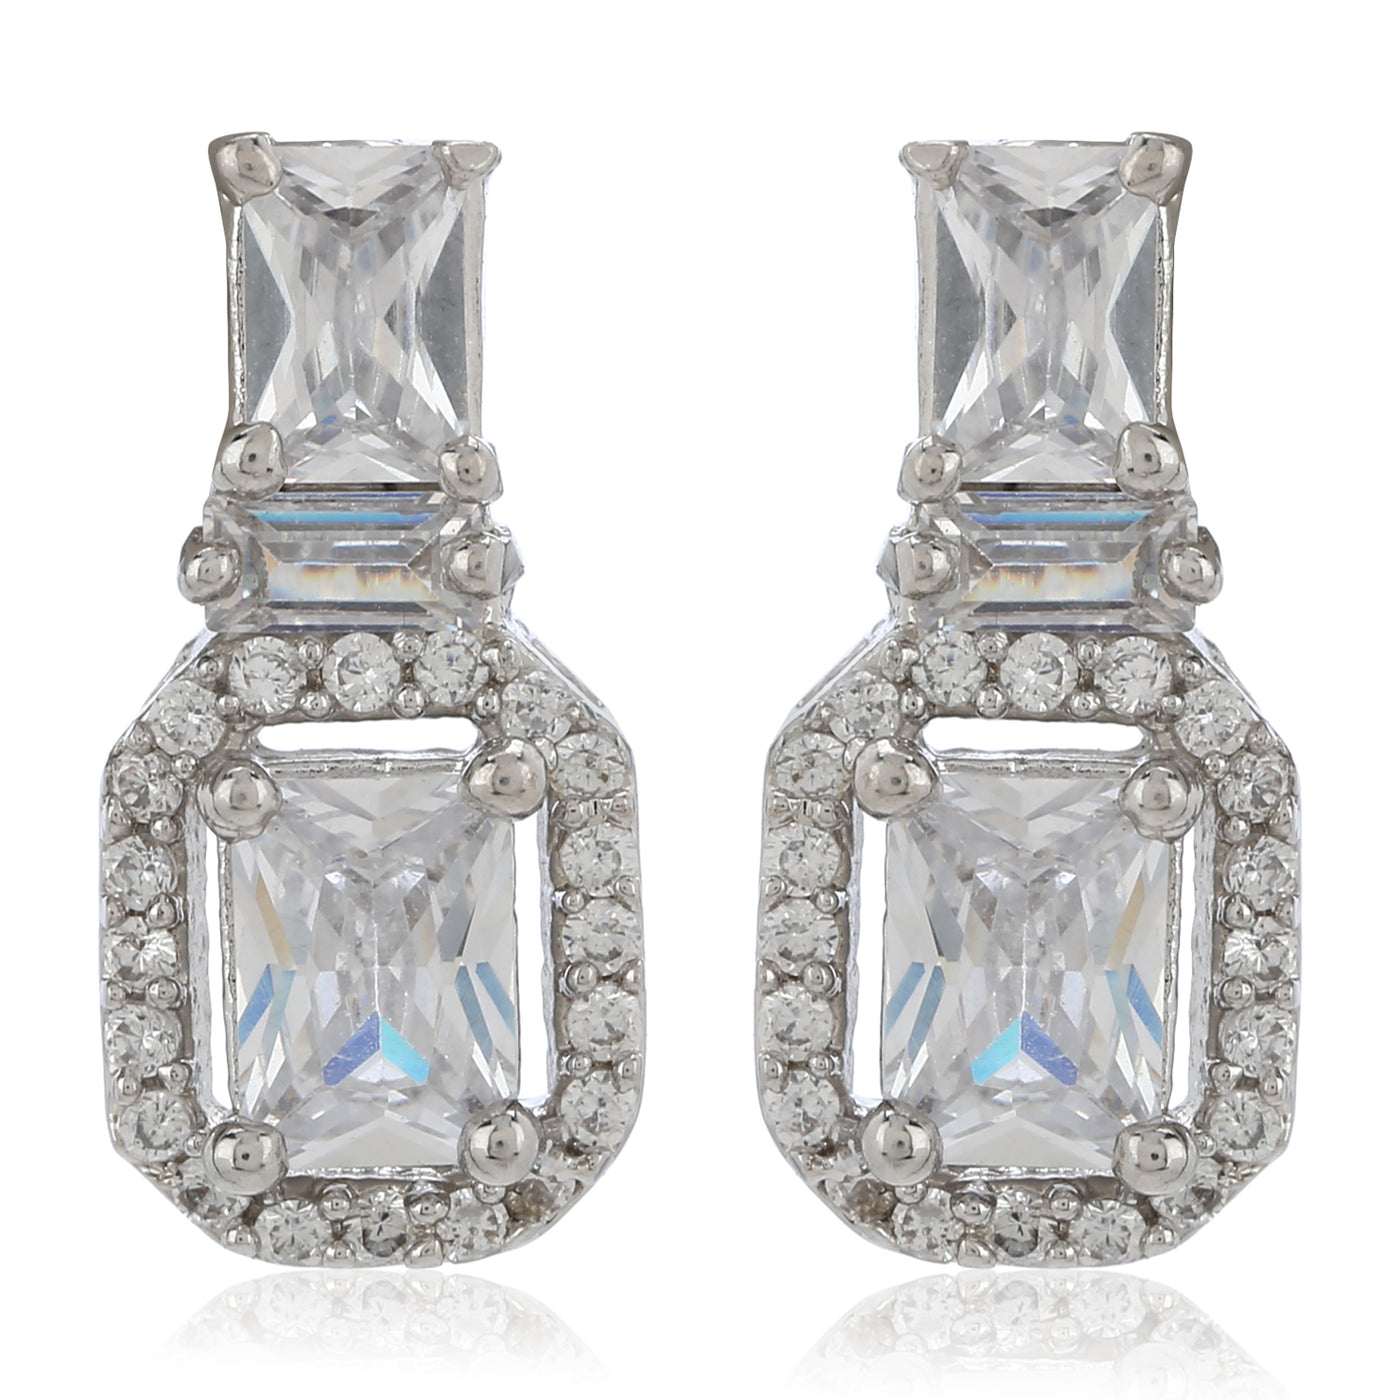 Diamante Fancy Earrings Set With Semi Precious Stones